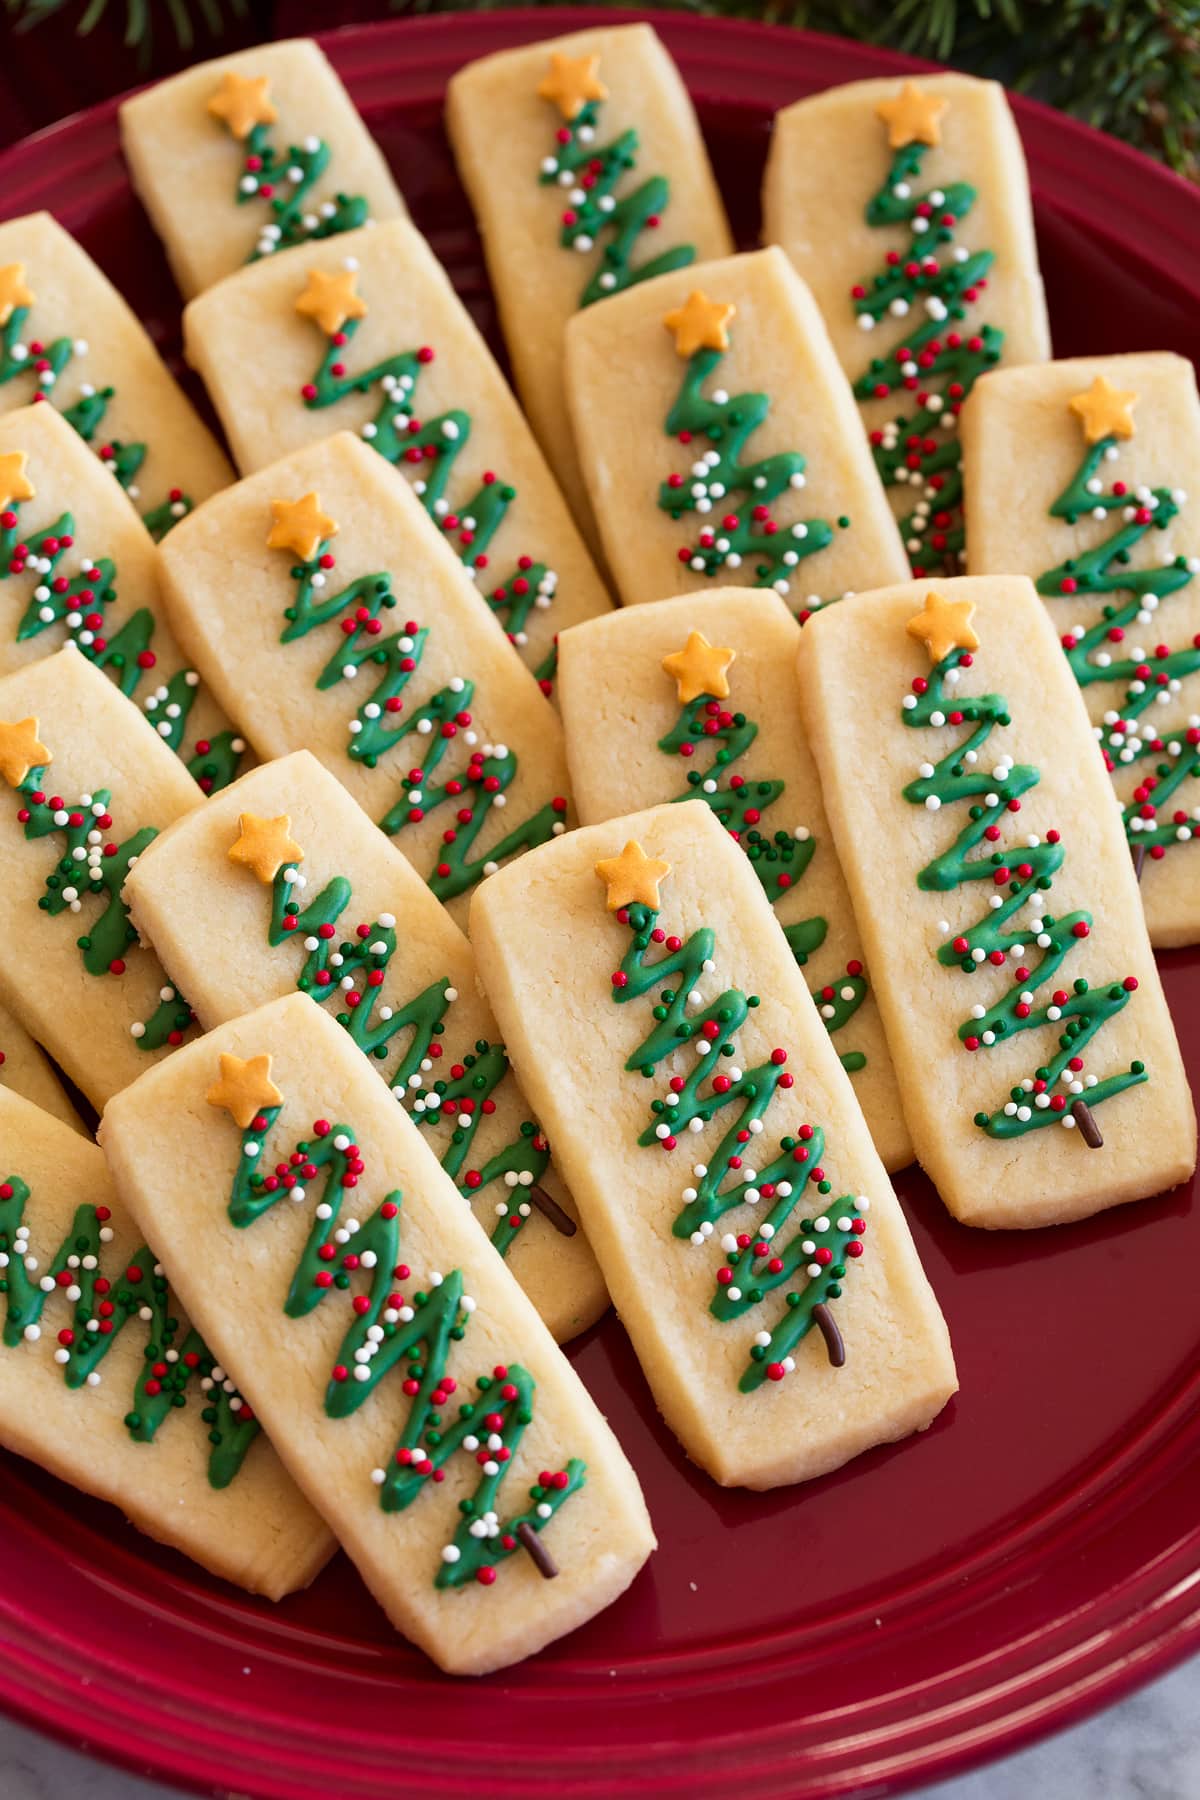 Christmas Cookies To Buy